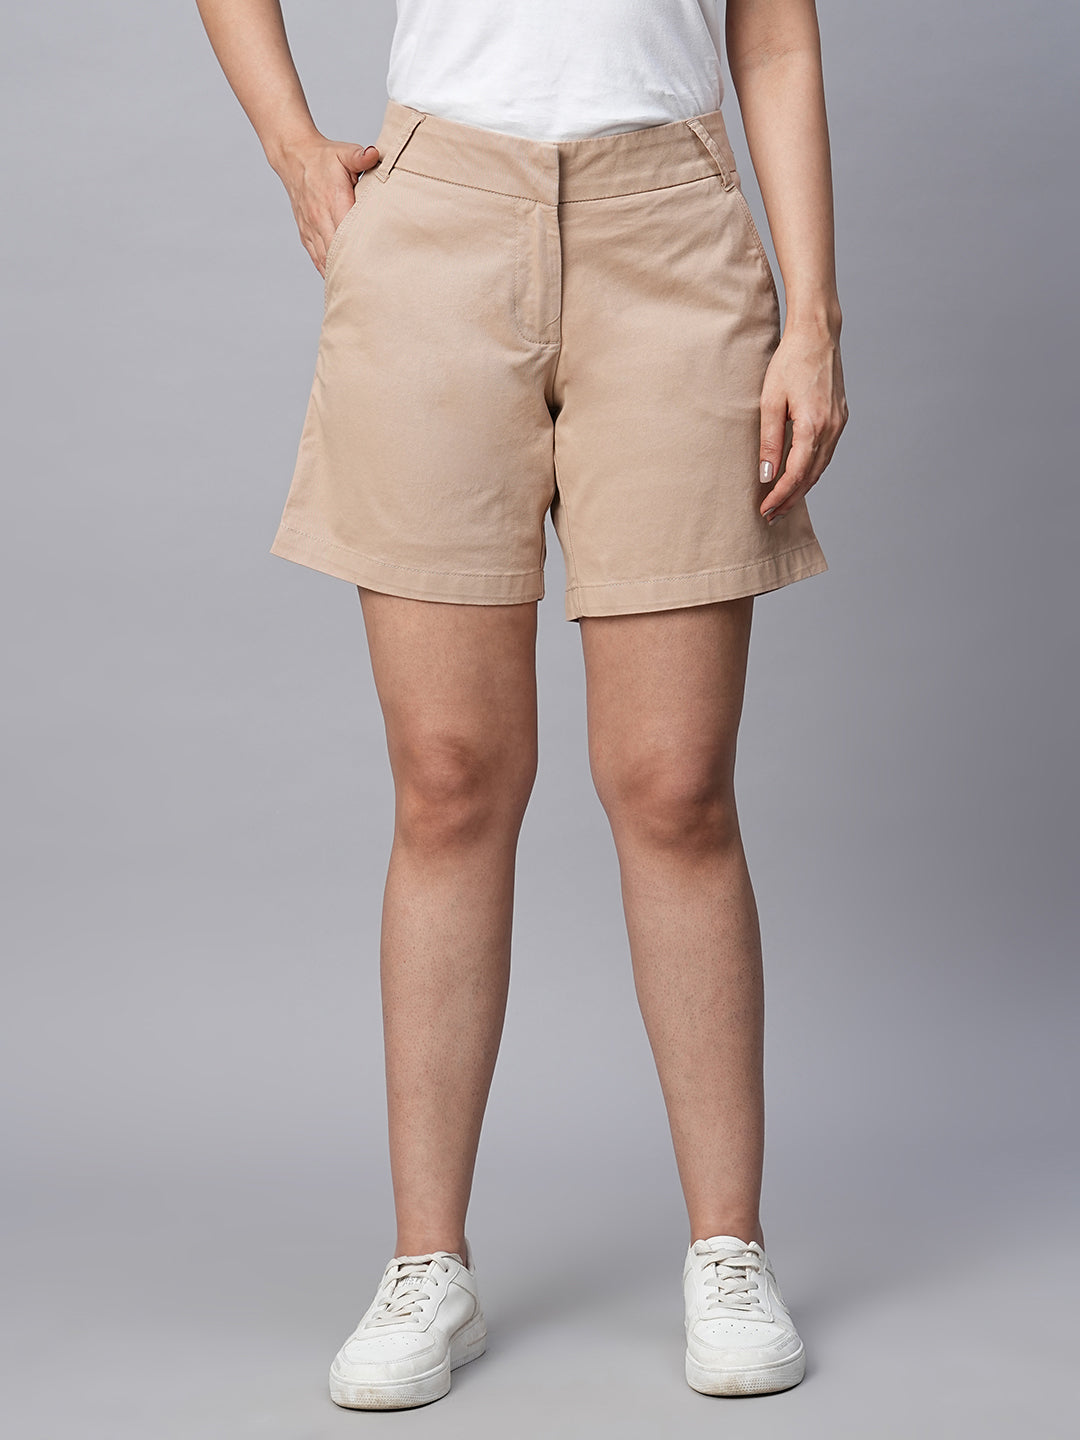 Women's Cotton Lycra Beige Regular Fit Shorts